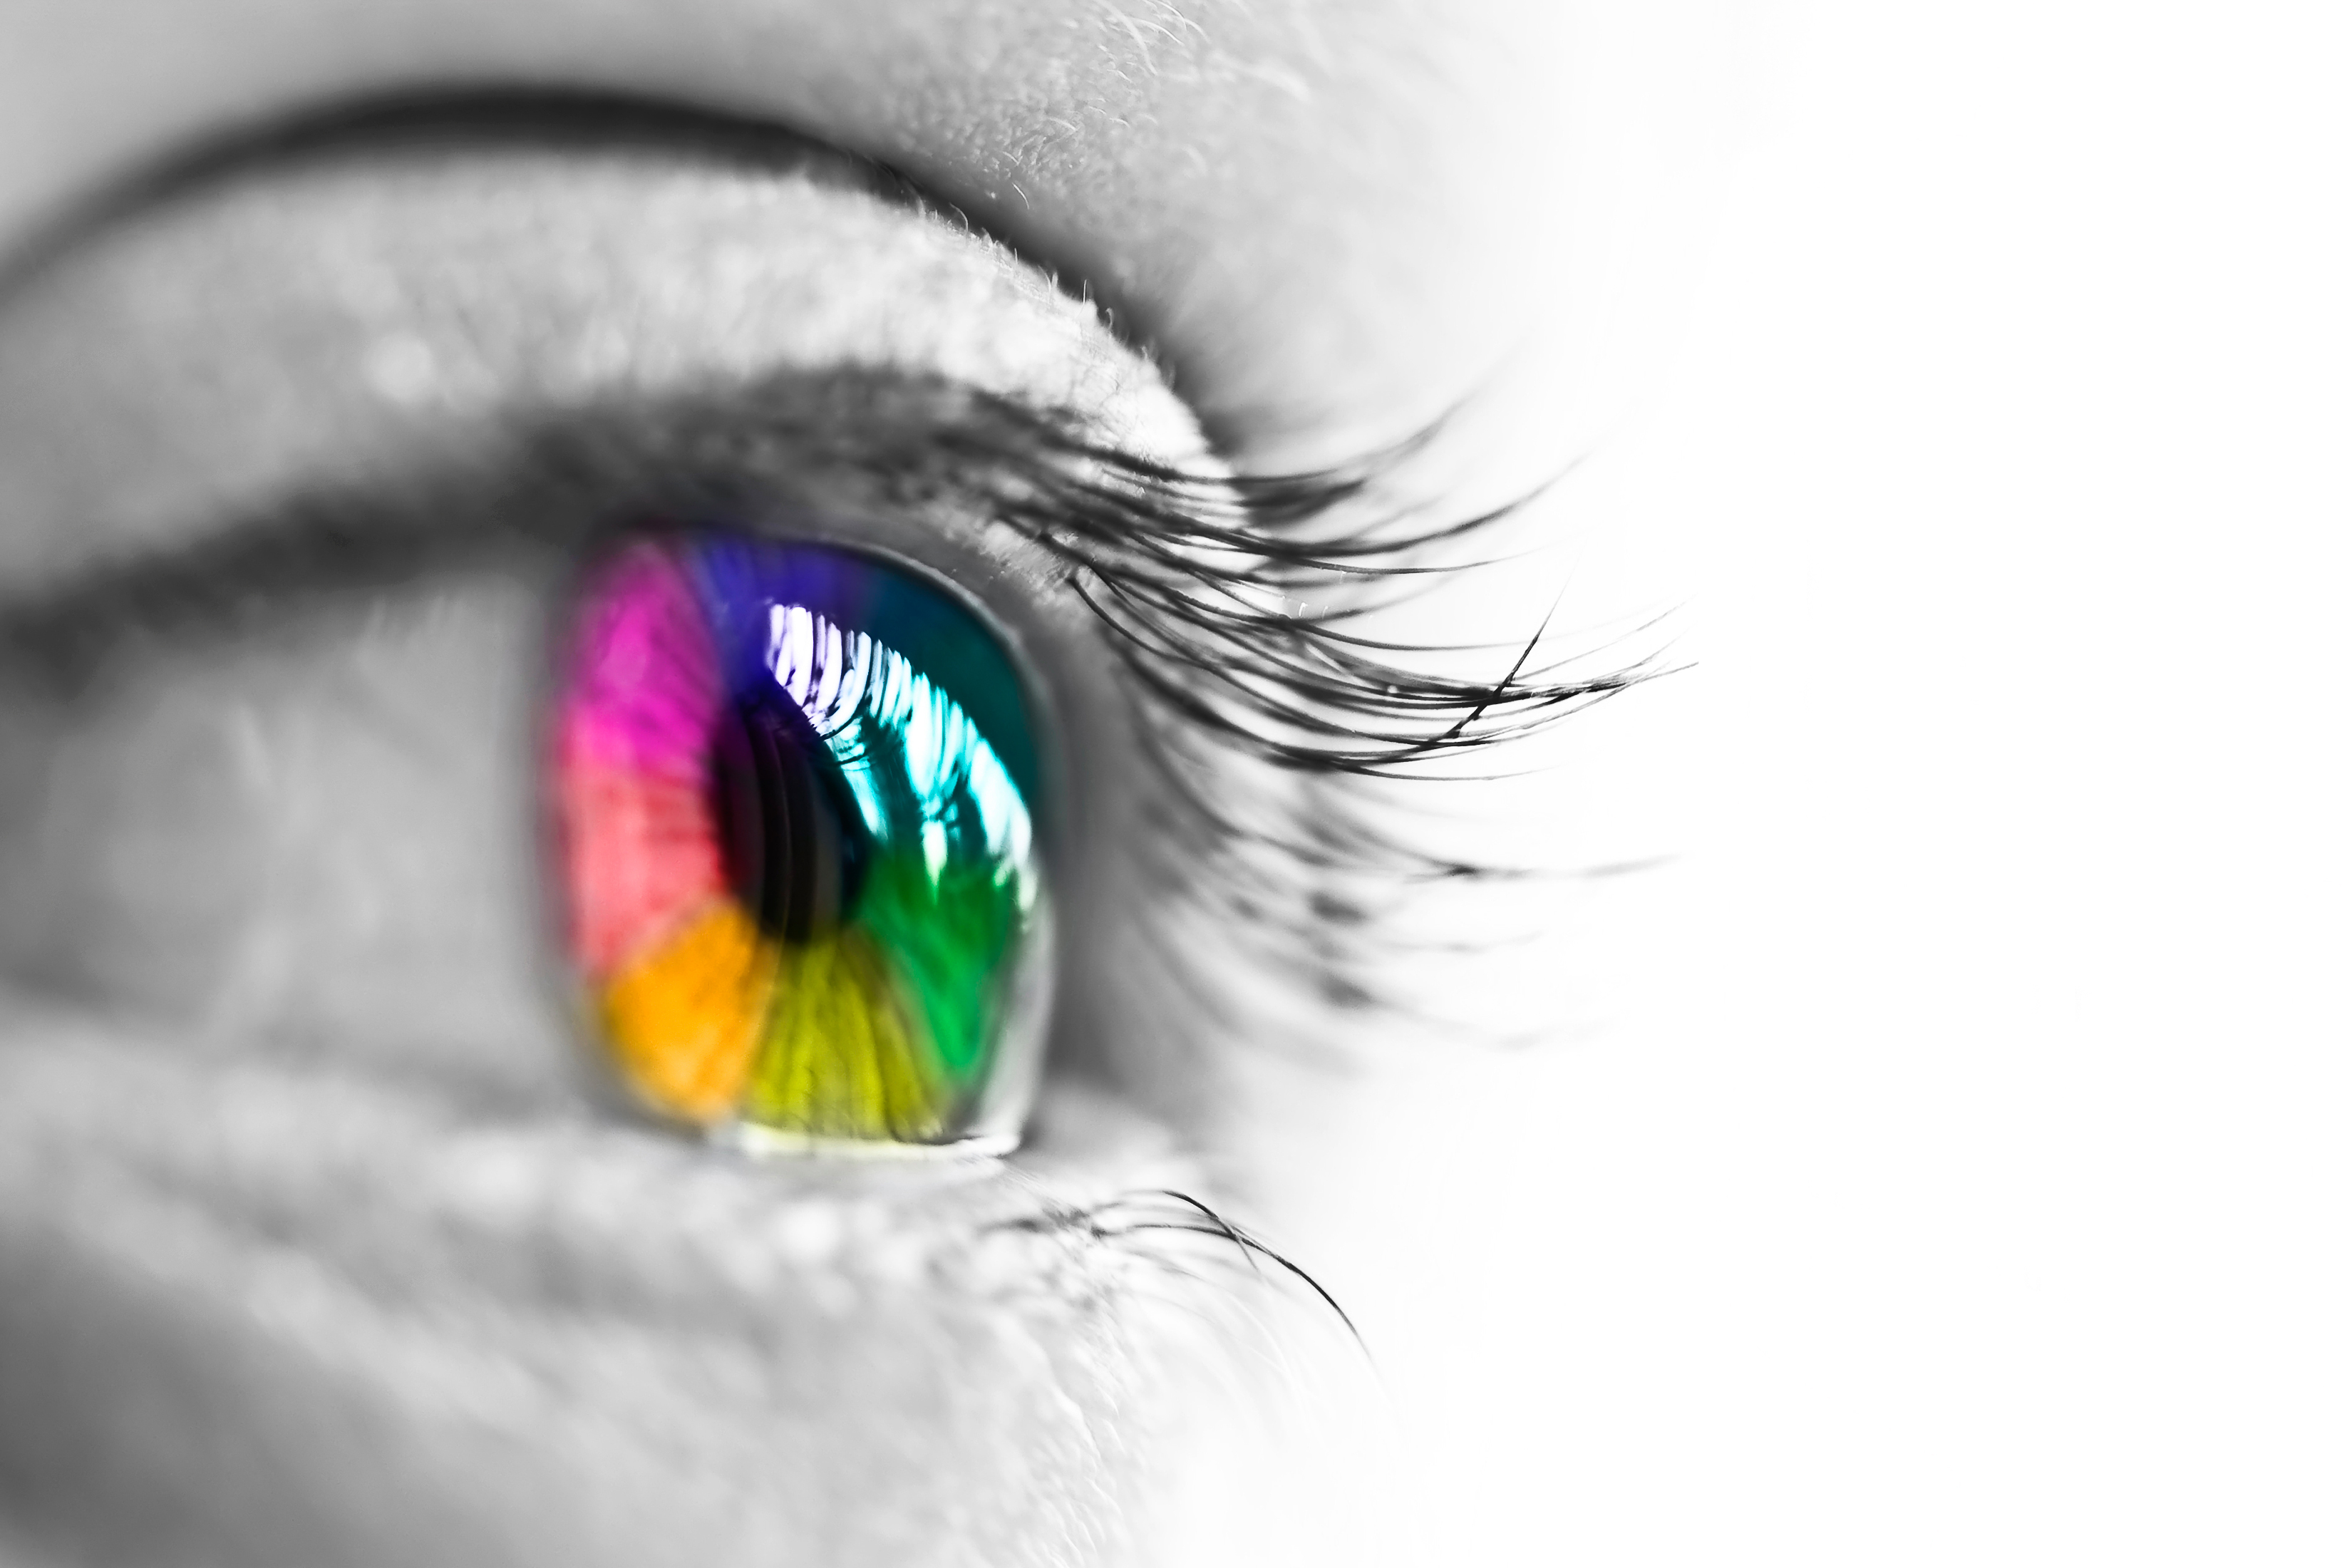 How Do Human Eyes Interpret Colors?